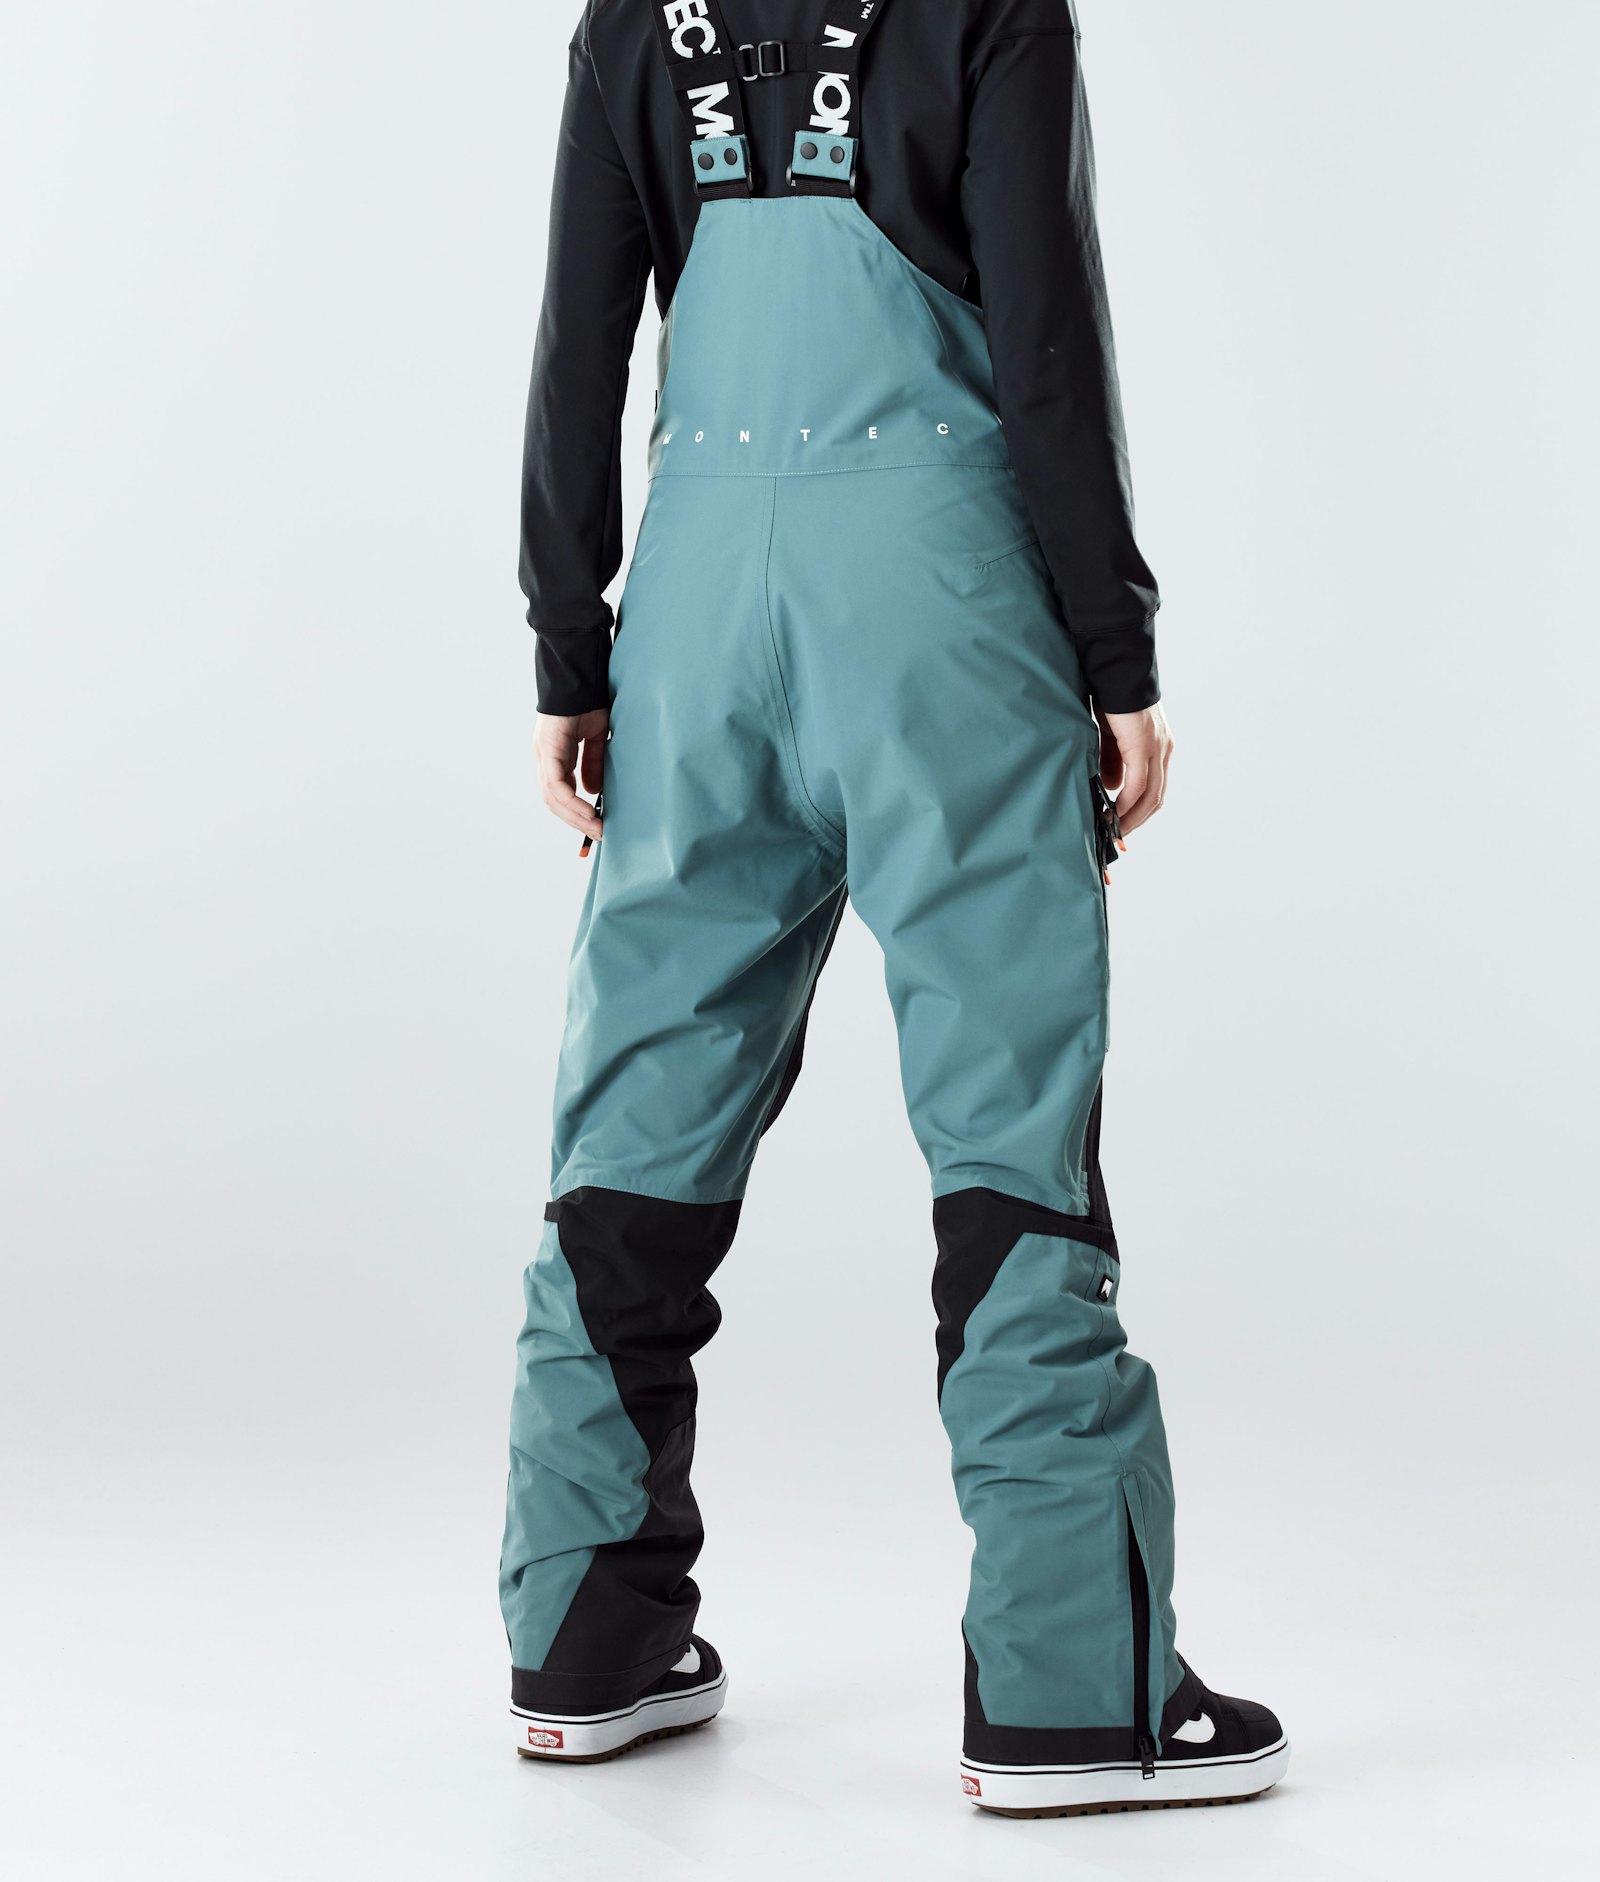 Fawk W 2020 Pantalones Snowboard Mujer Atlantic/Black